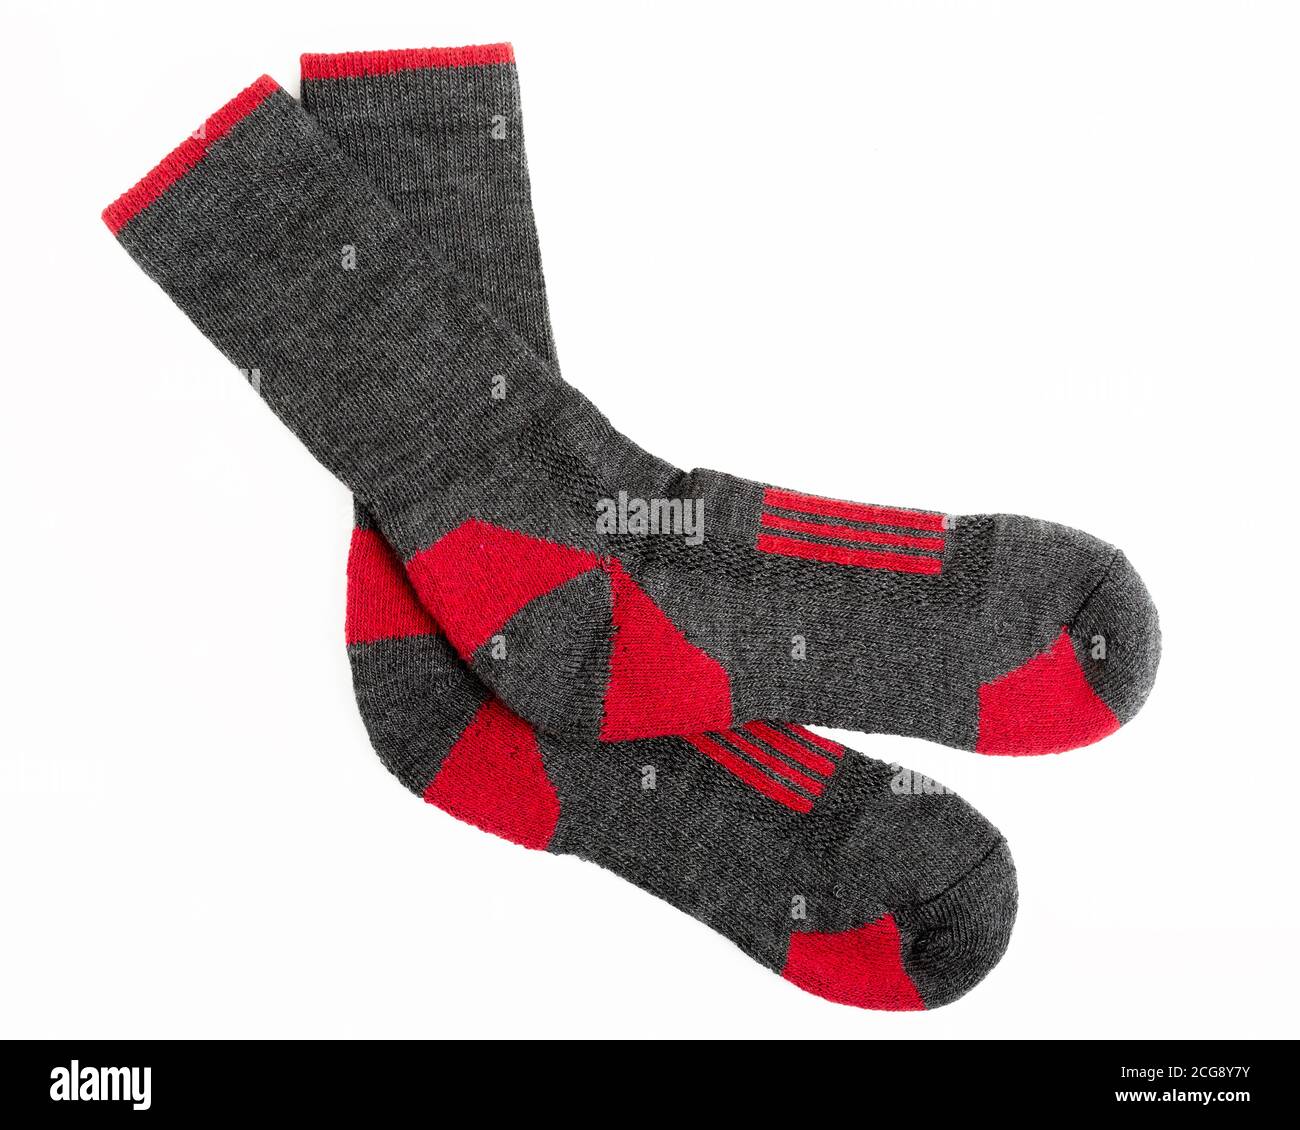 Woolen sport socks for cooler weather. Stock Photo